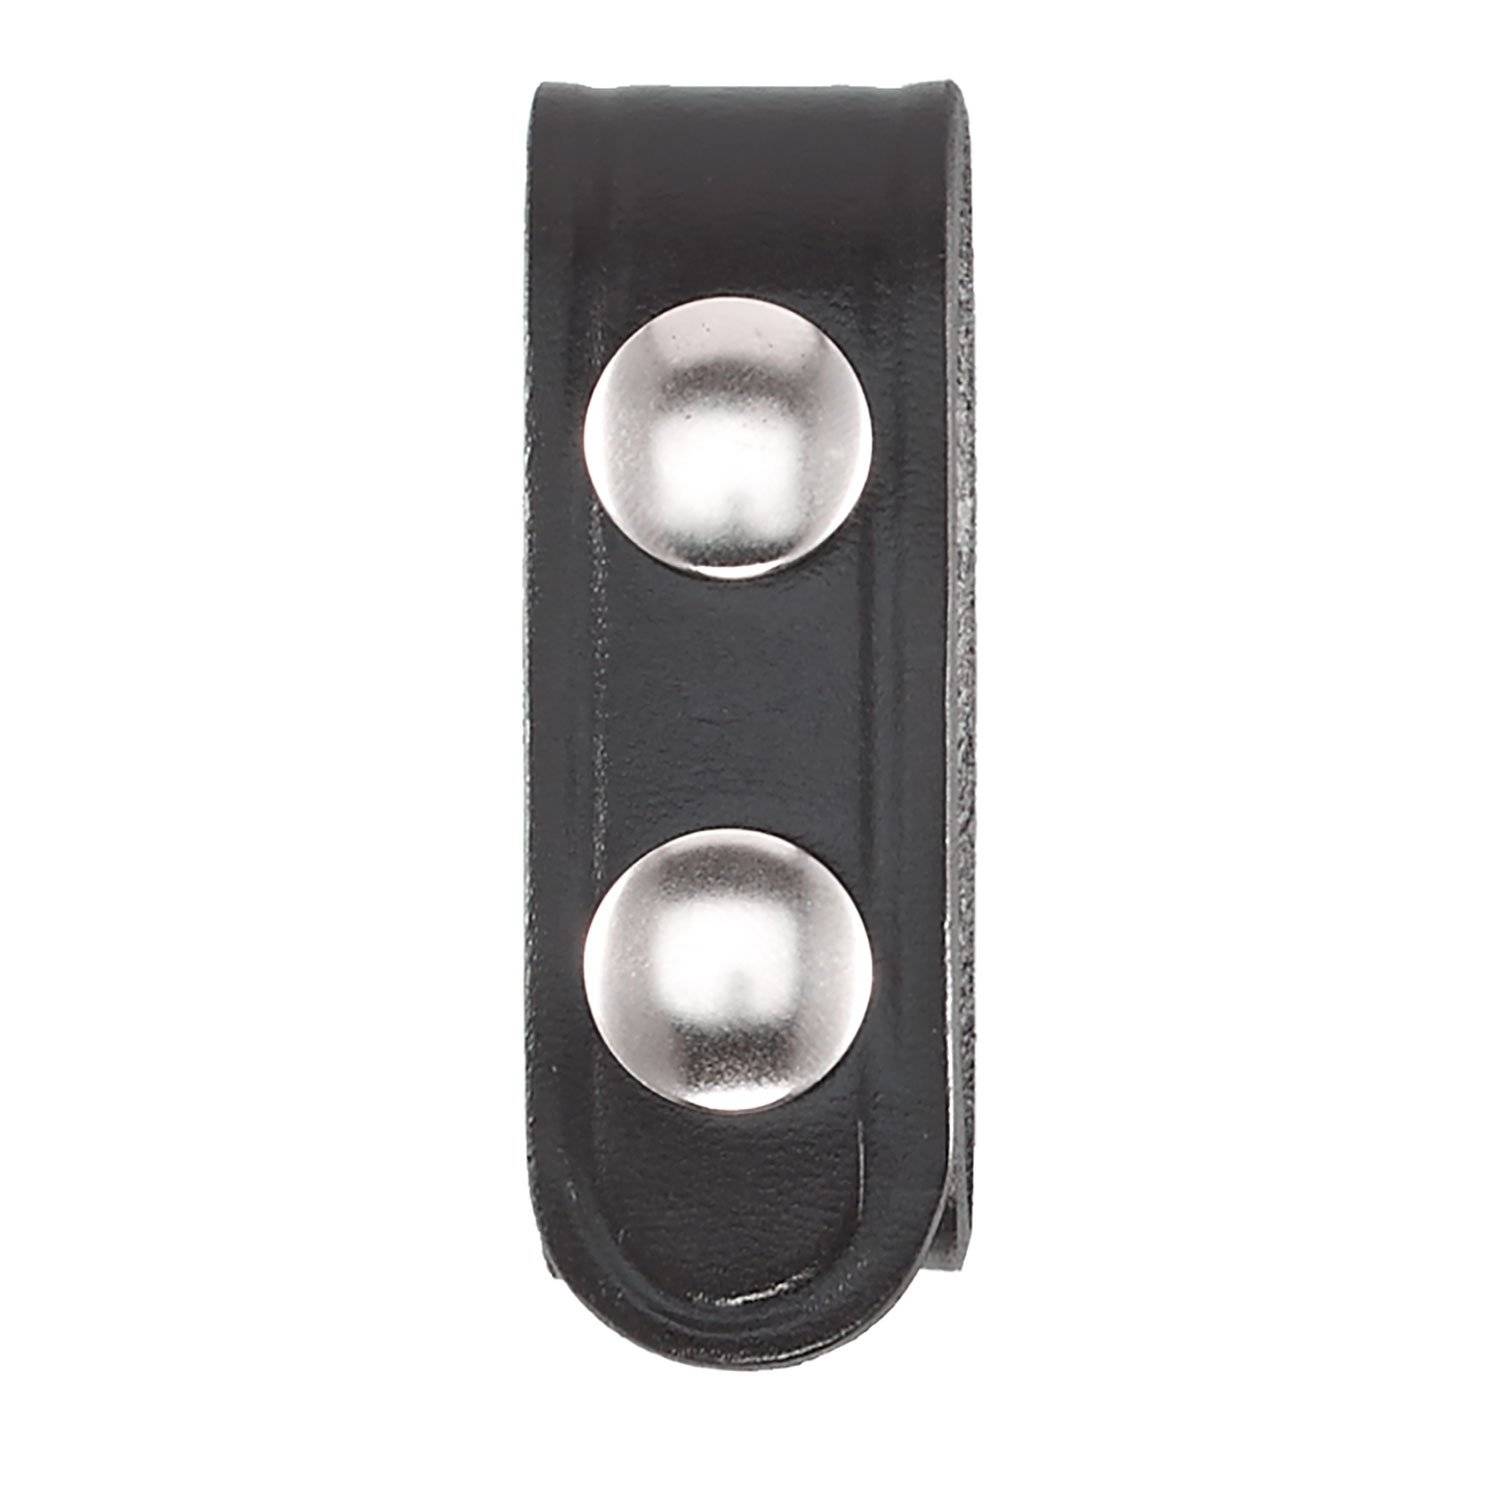 Aker Leather 2-Snap Belt Keeper